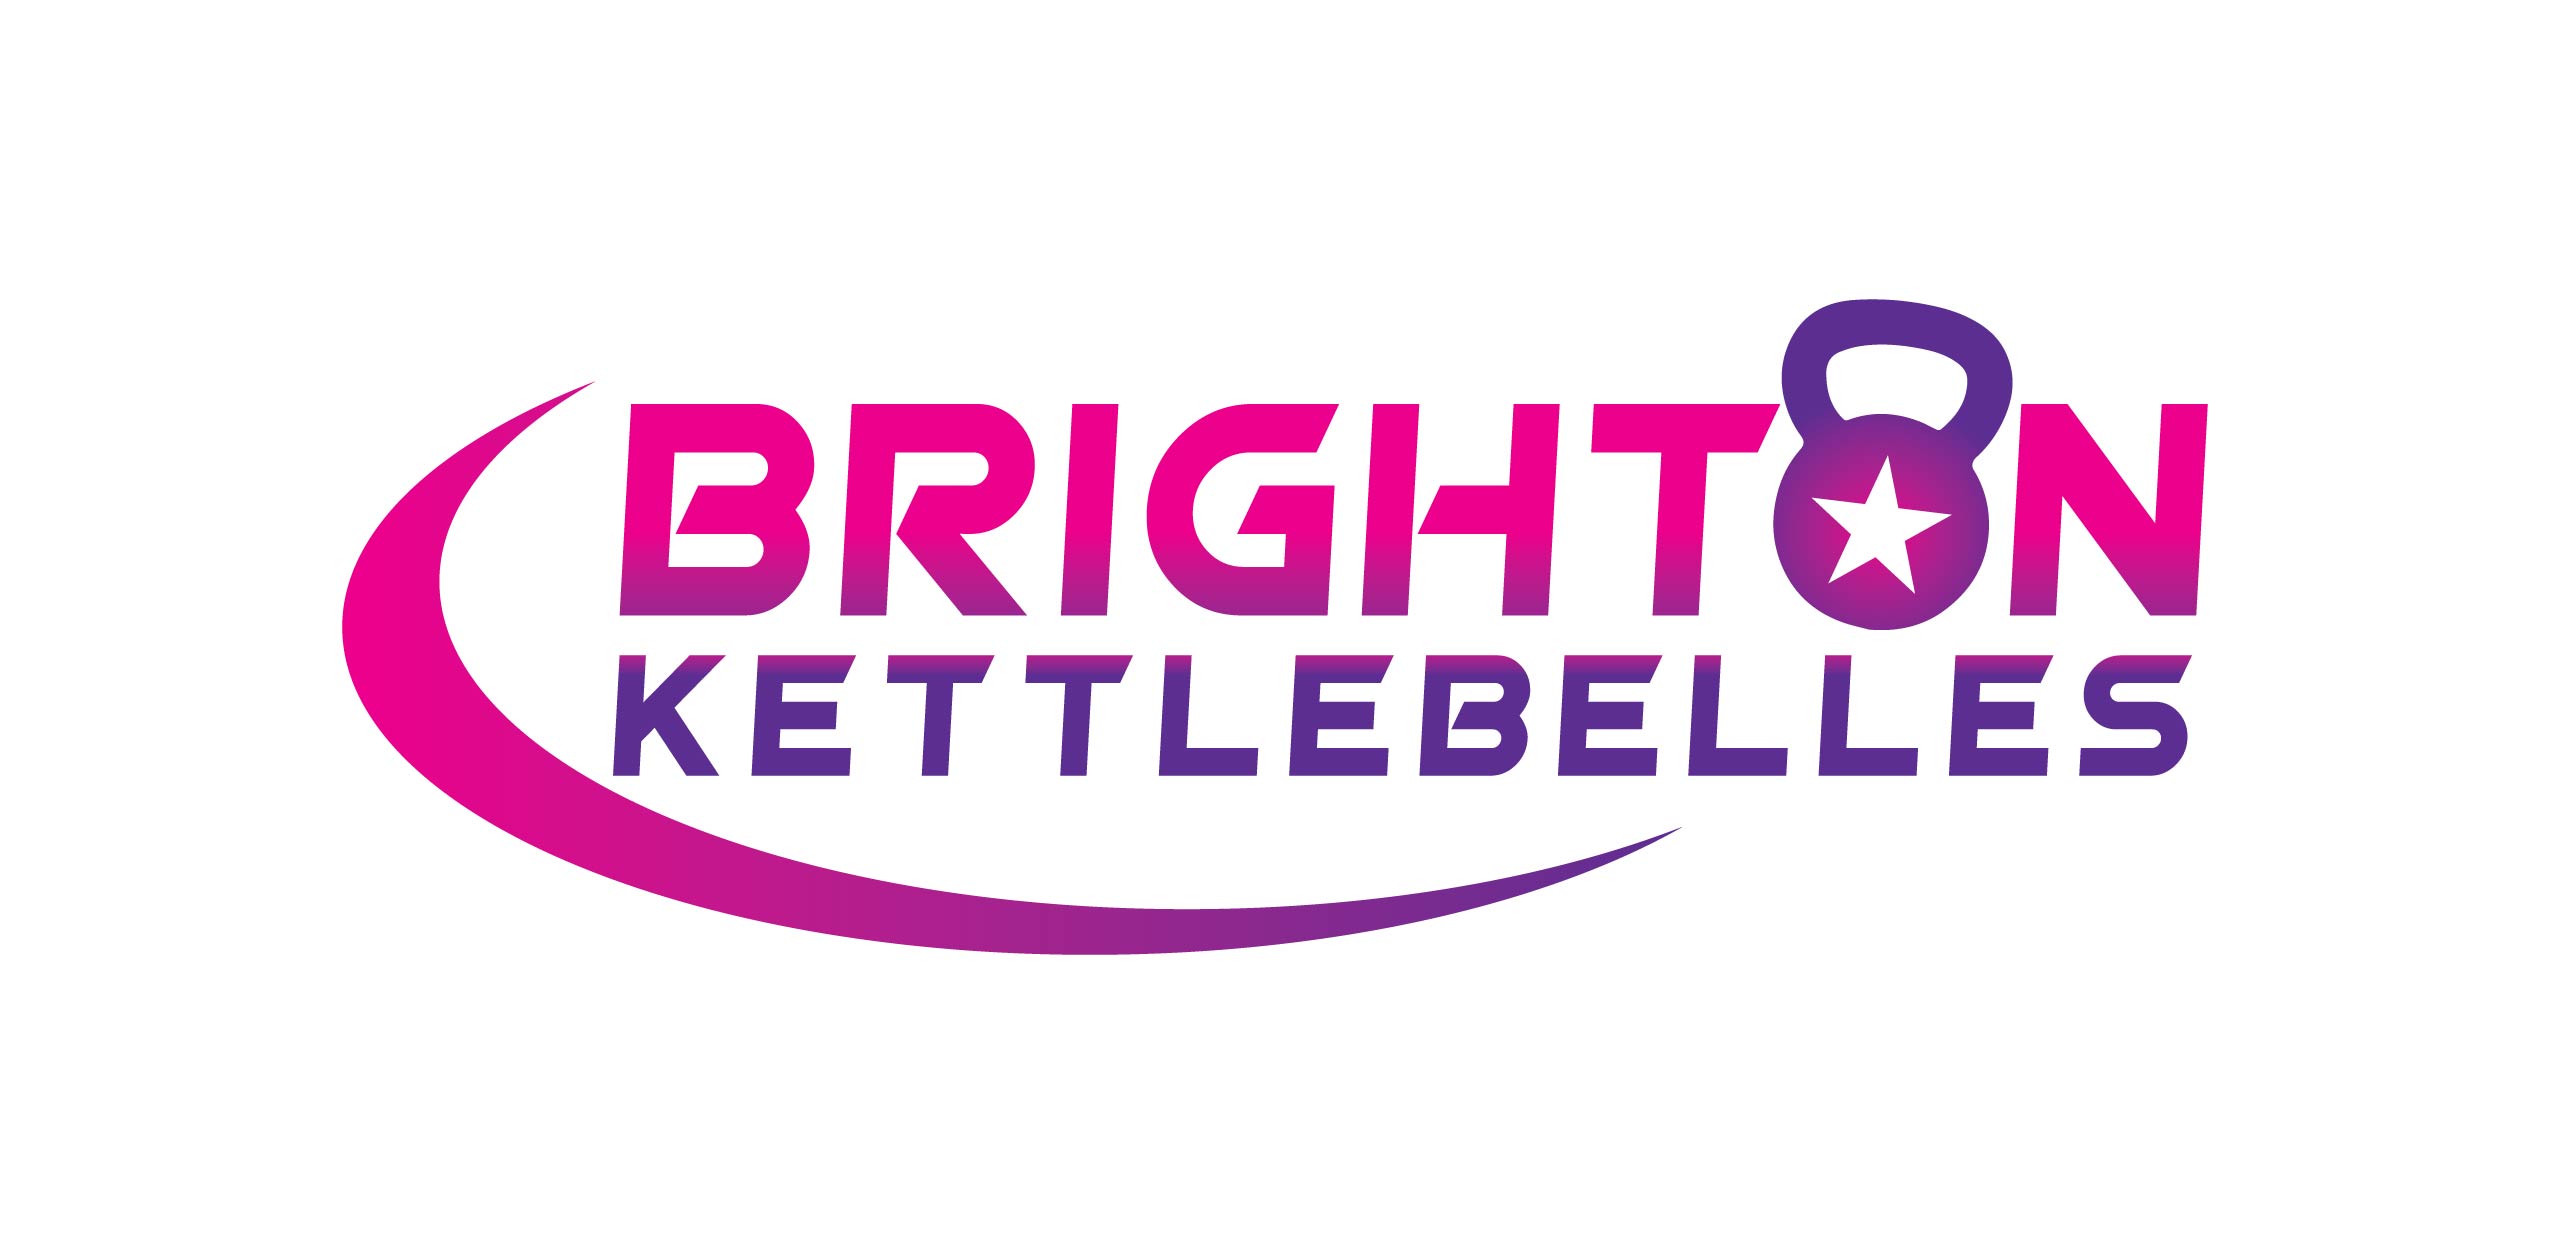 Brighton Kettlebelles womens only Kettlebell fitness class